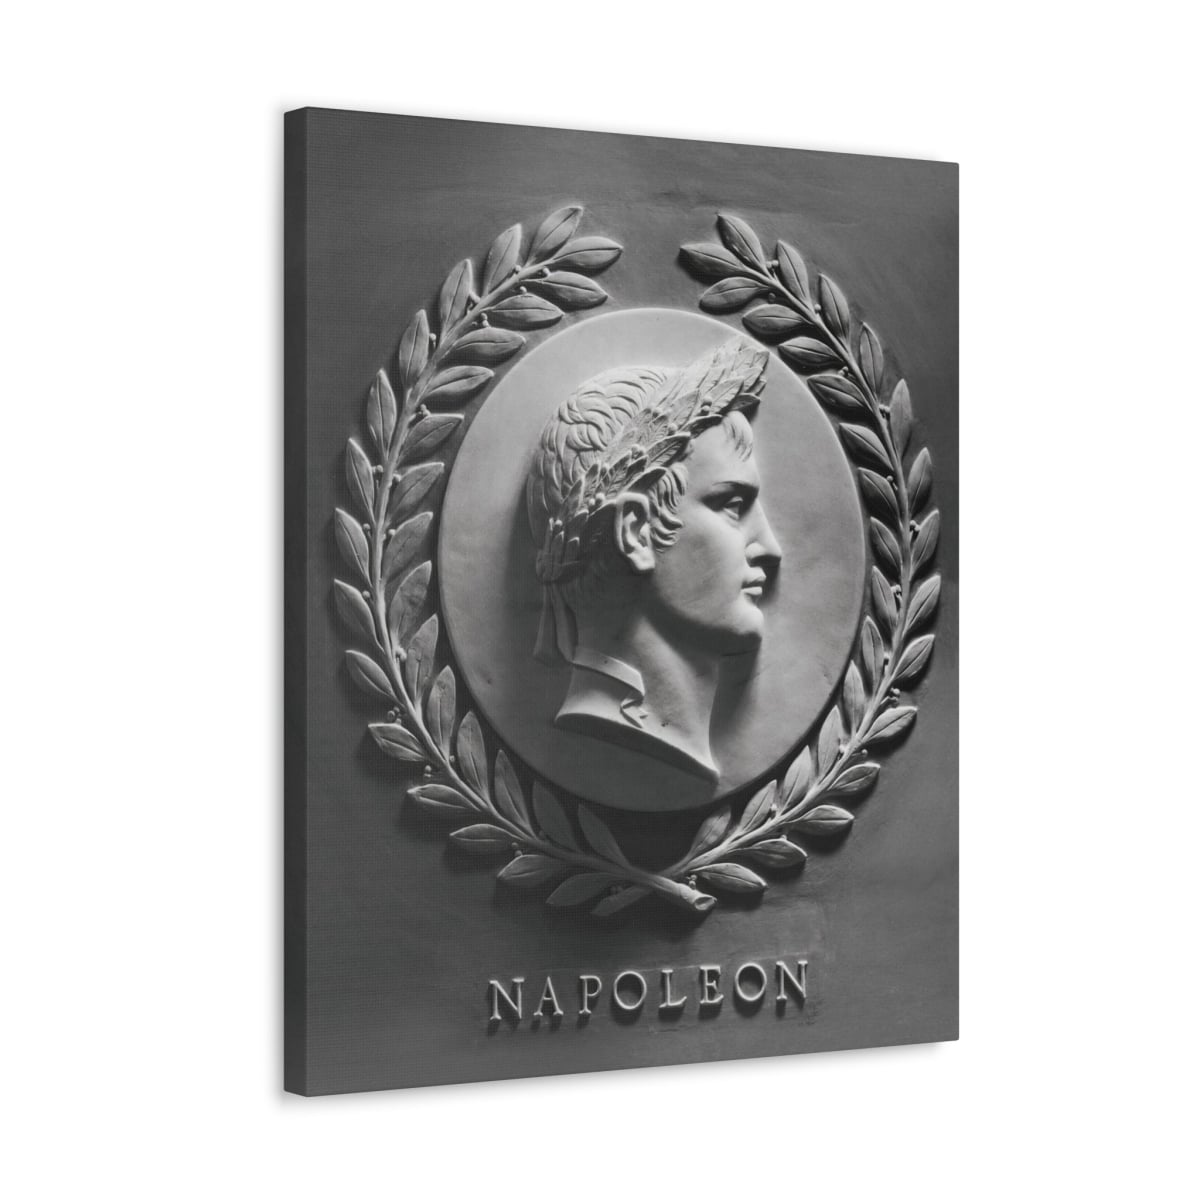 Explore the Majesty of Napoleon: Stone Sculpture Gallery Wrap